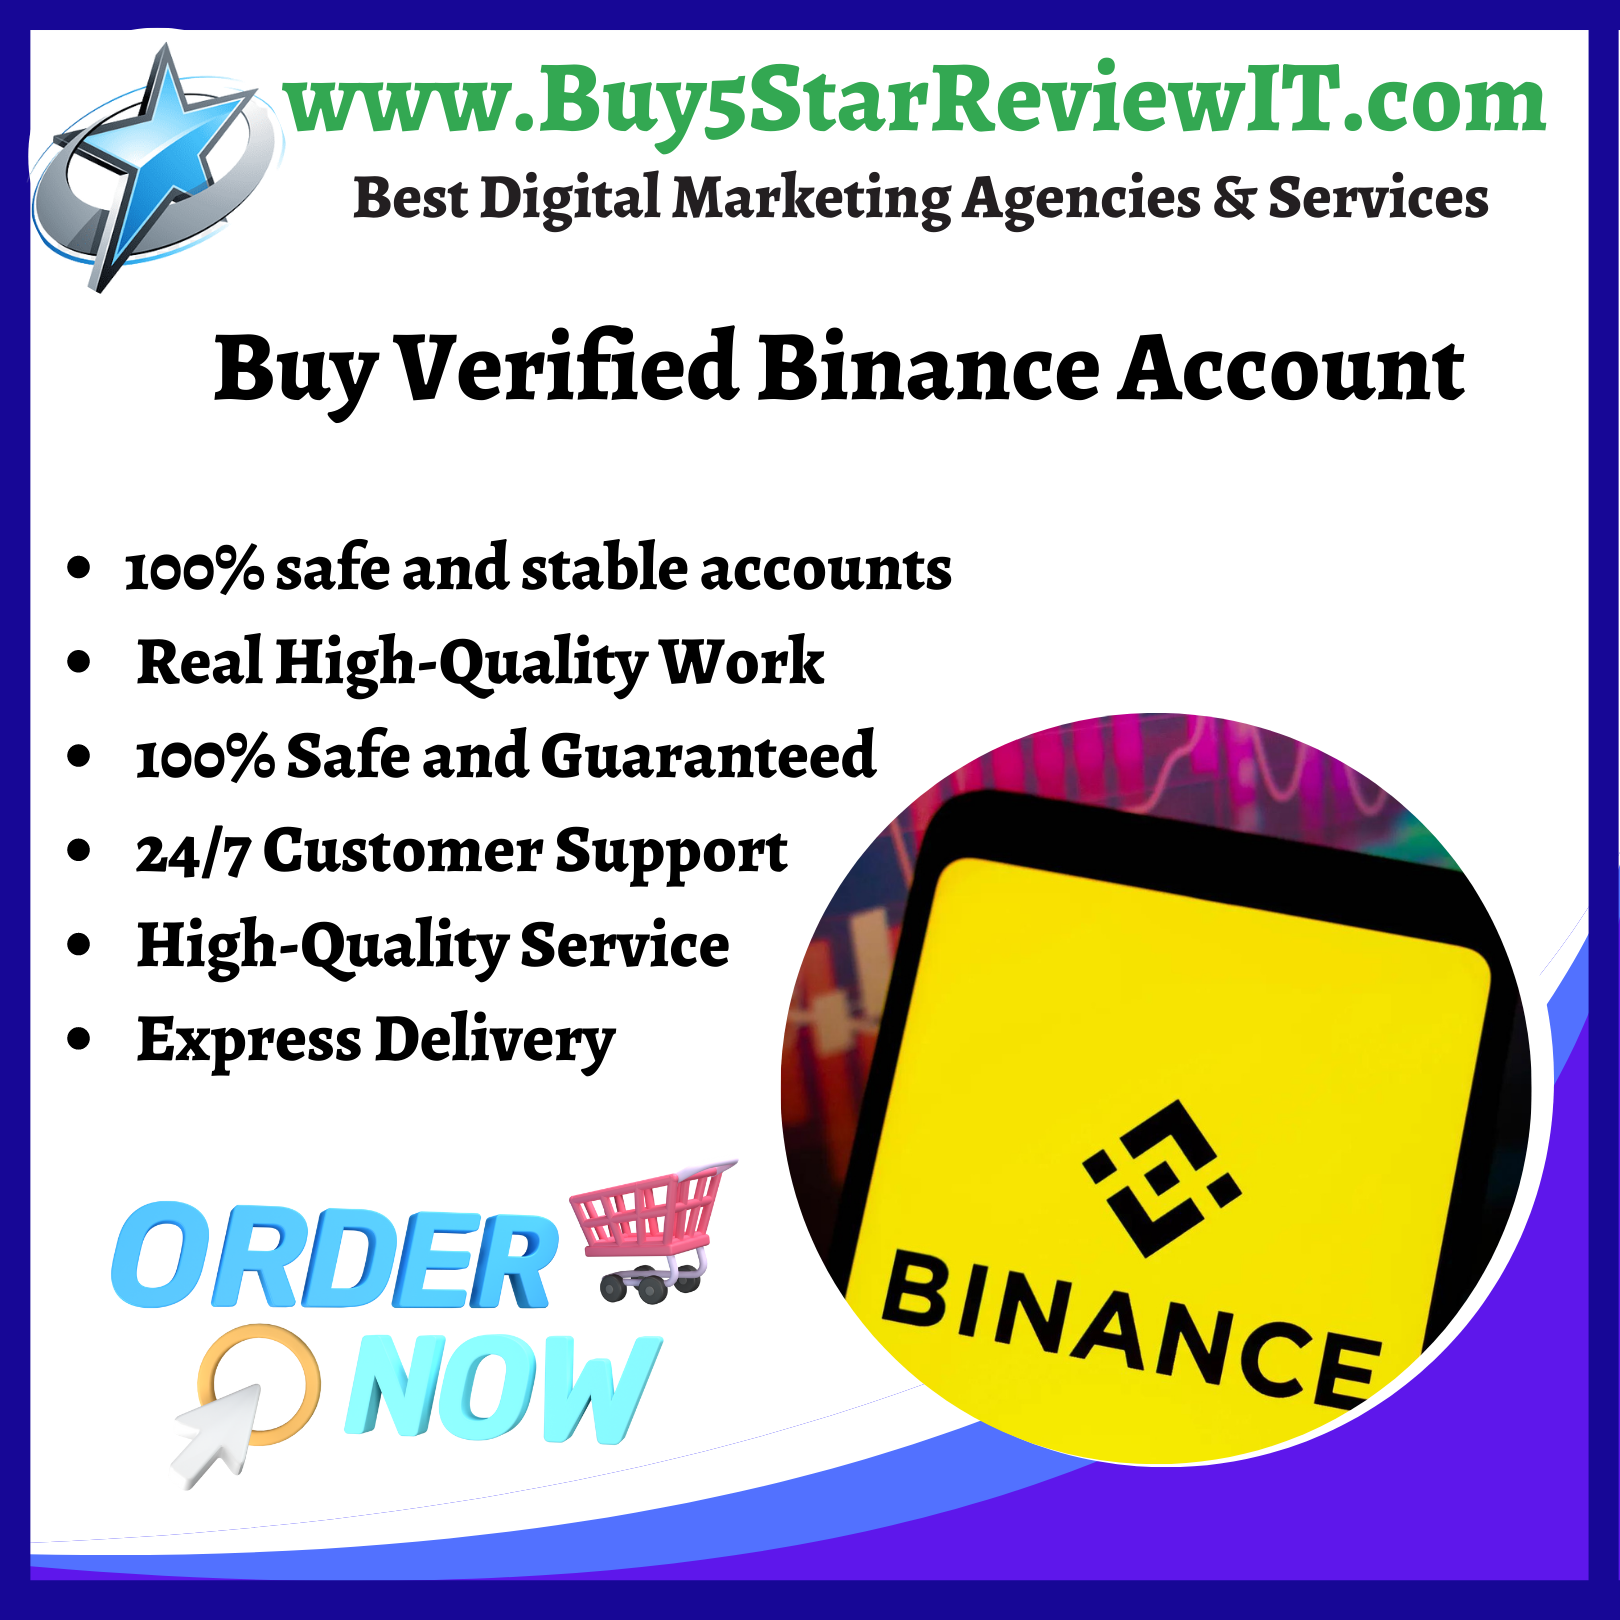 Buy Verified Binance Accounts - 100% Documents Safe & Selfie Verified